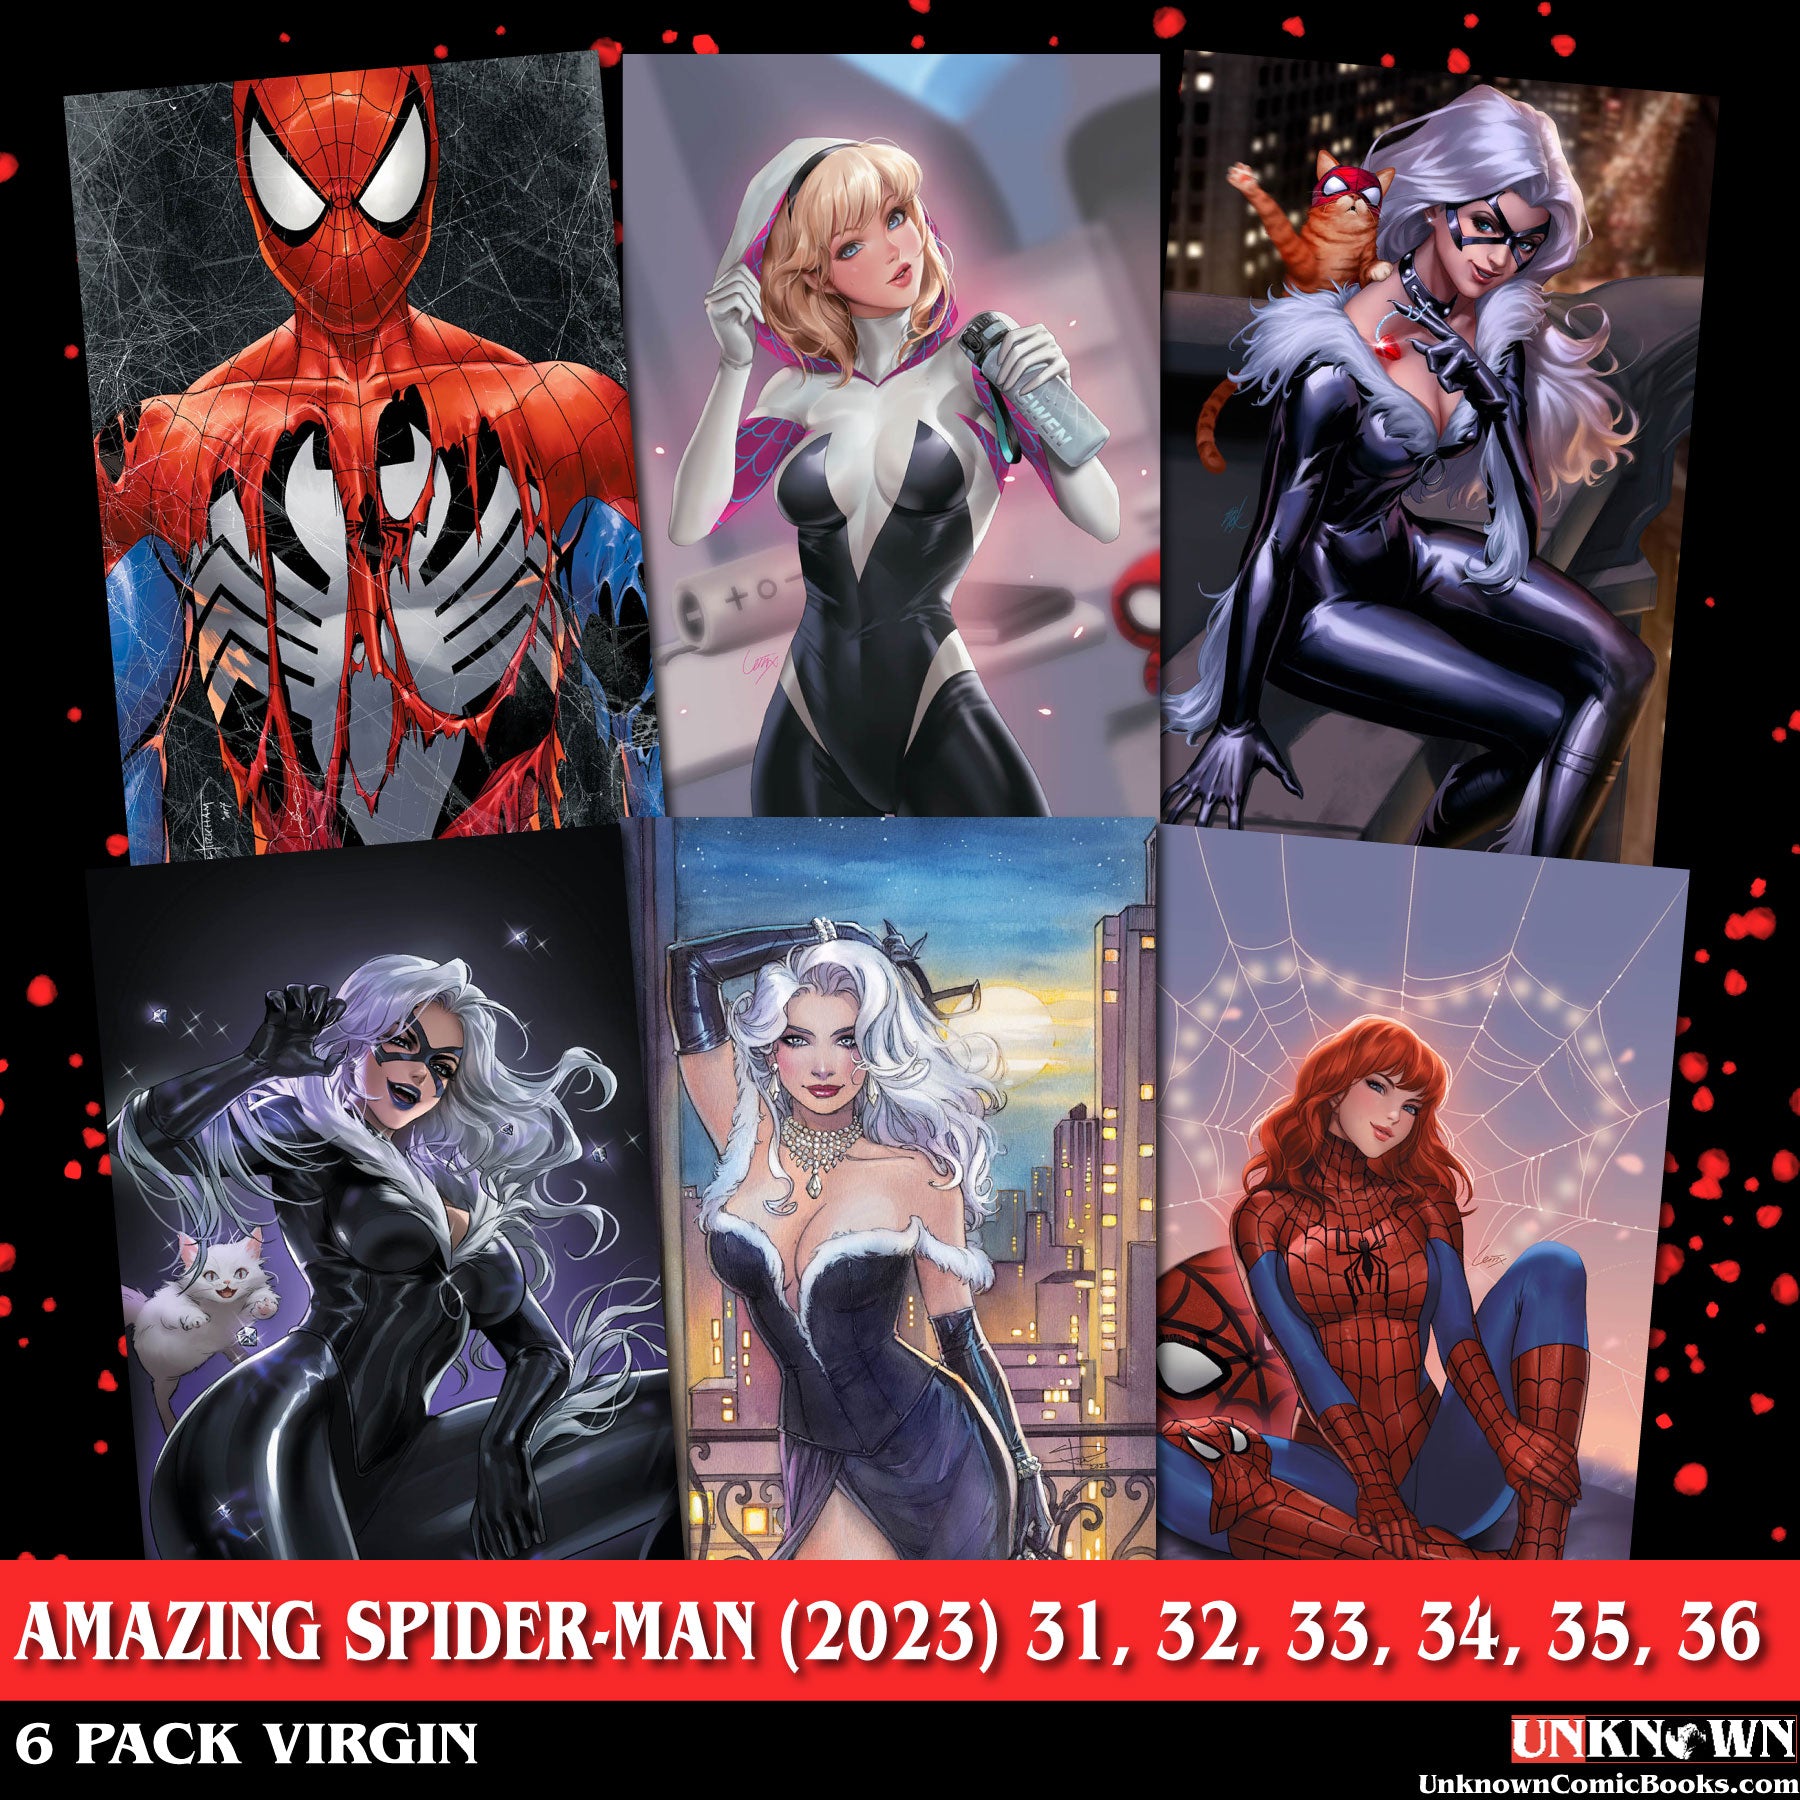 [6 PACK VIRGIN] AMAZING SPIDER-MAN (31-36) #31 #32 #33 #34 #35 #36 UNKNOWN COMICS EXCLUSIVE VIRGIN VAR (10/25/2023)